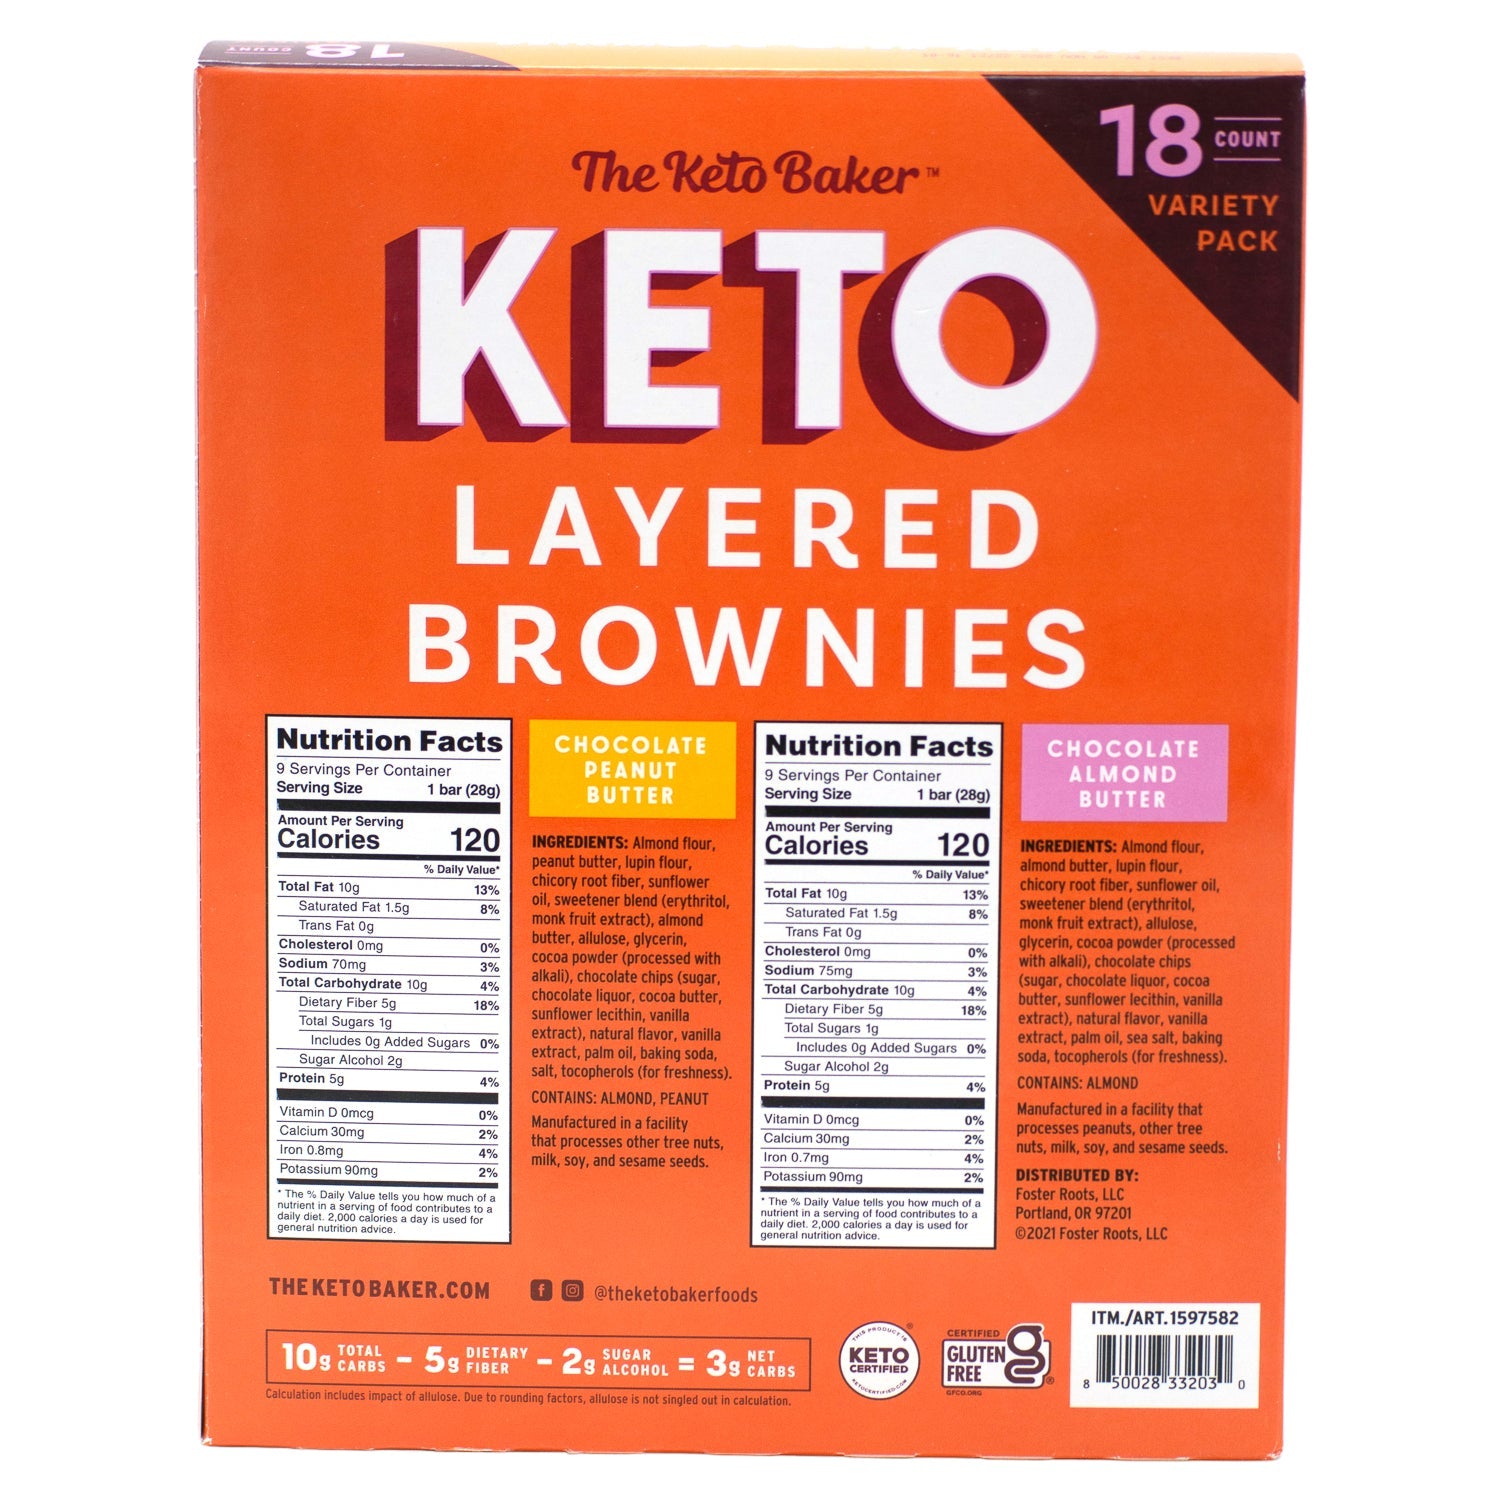 The Keto Baker Keto Layered Brownies The Keto Baker 